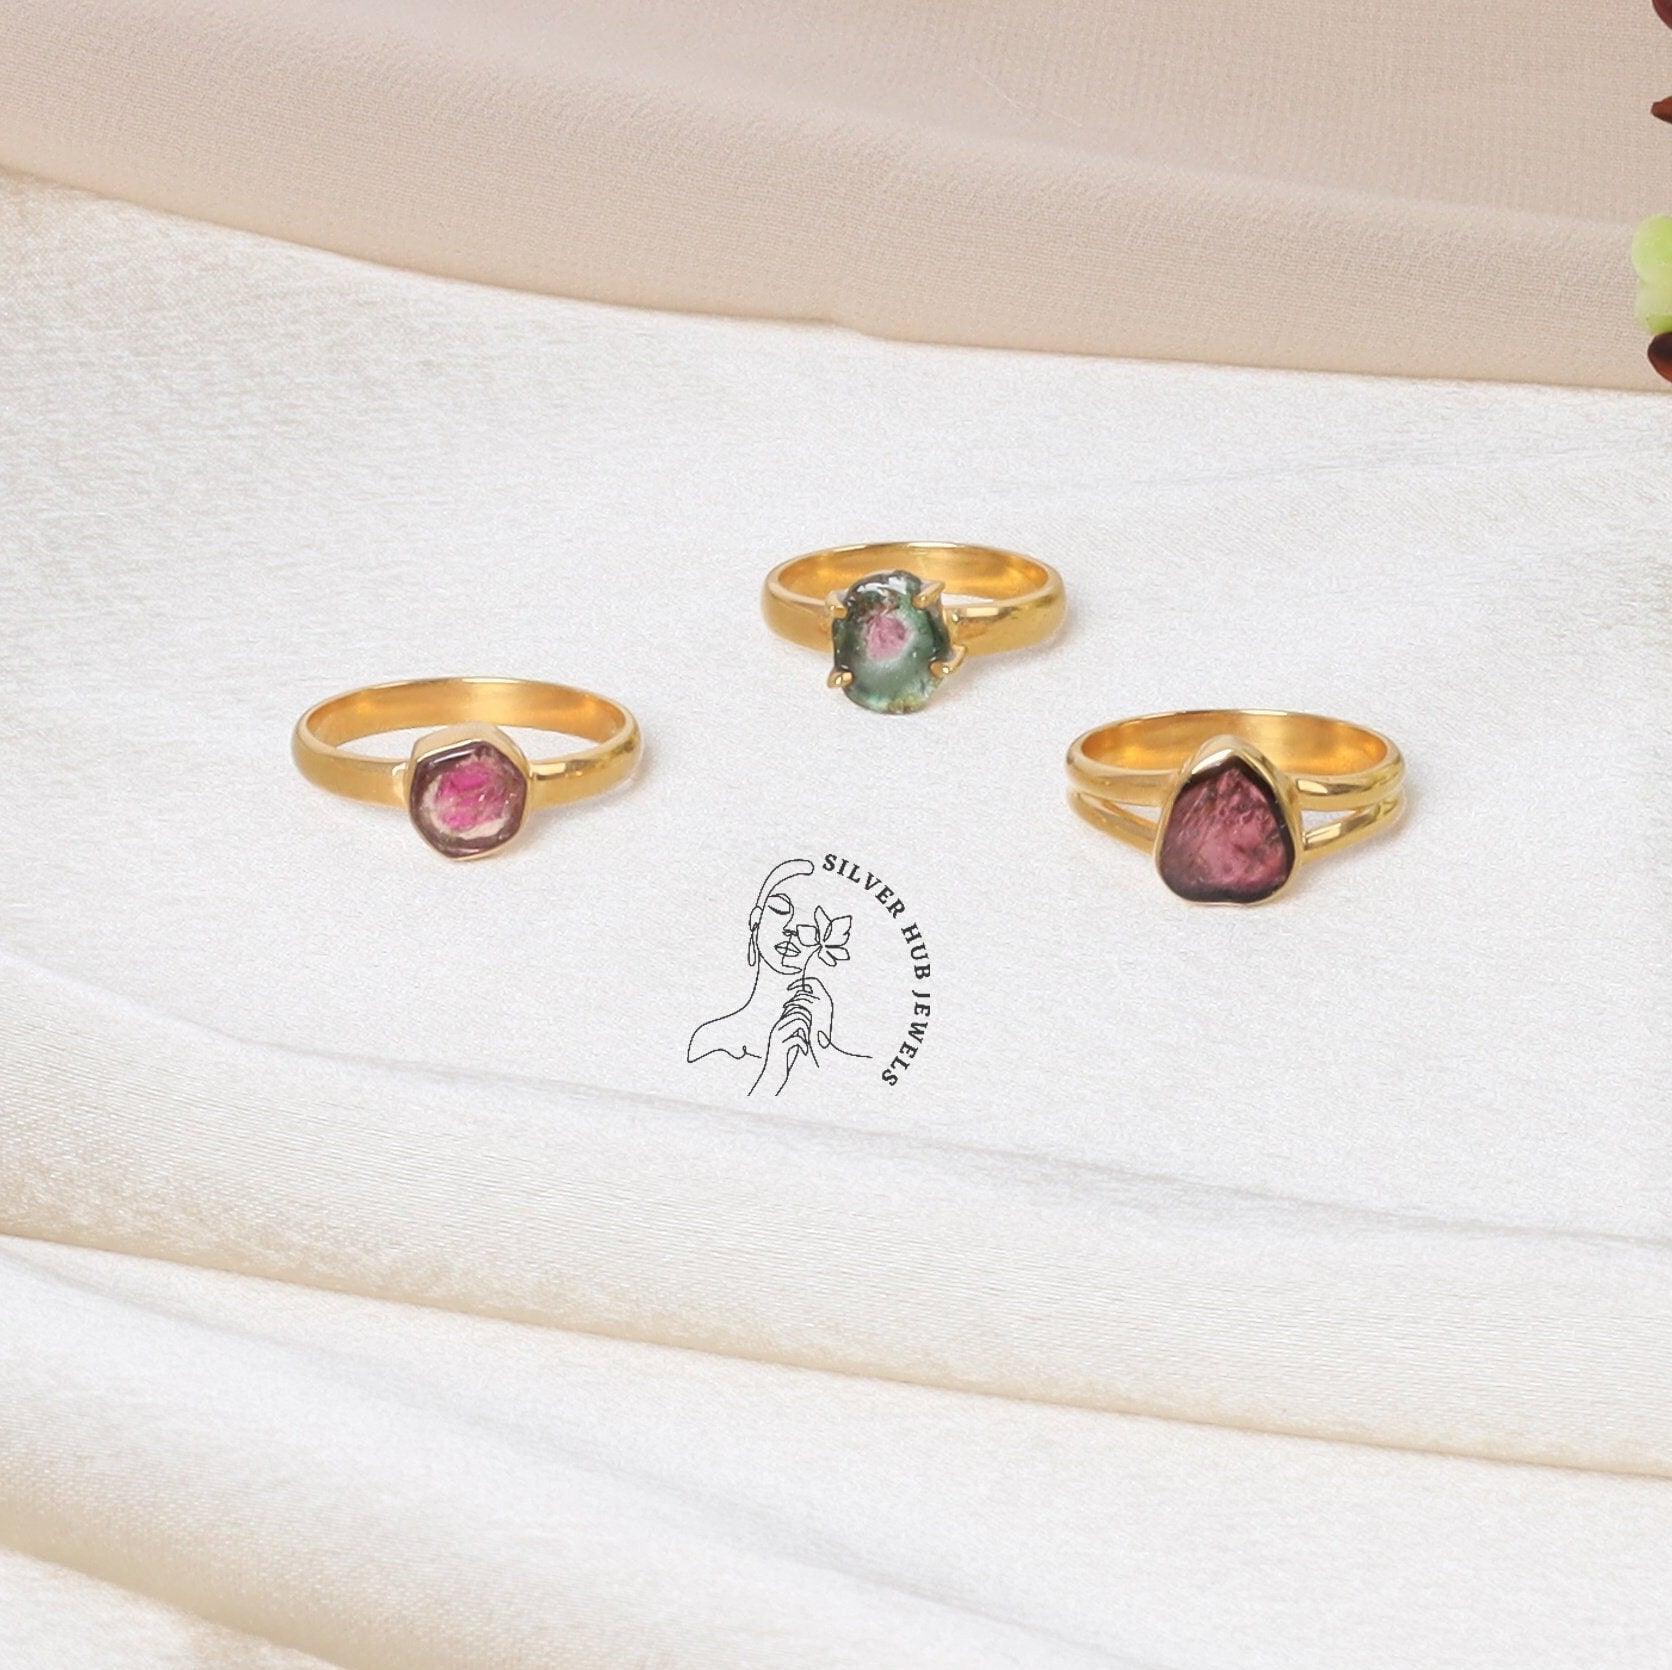 Watermelon Tourmaline Ring | Sterling Silver |Watermelon Tourmaline Jewelry | Raw Minialist Ring For Girls | Gift for her - Silverhubjewels